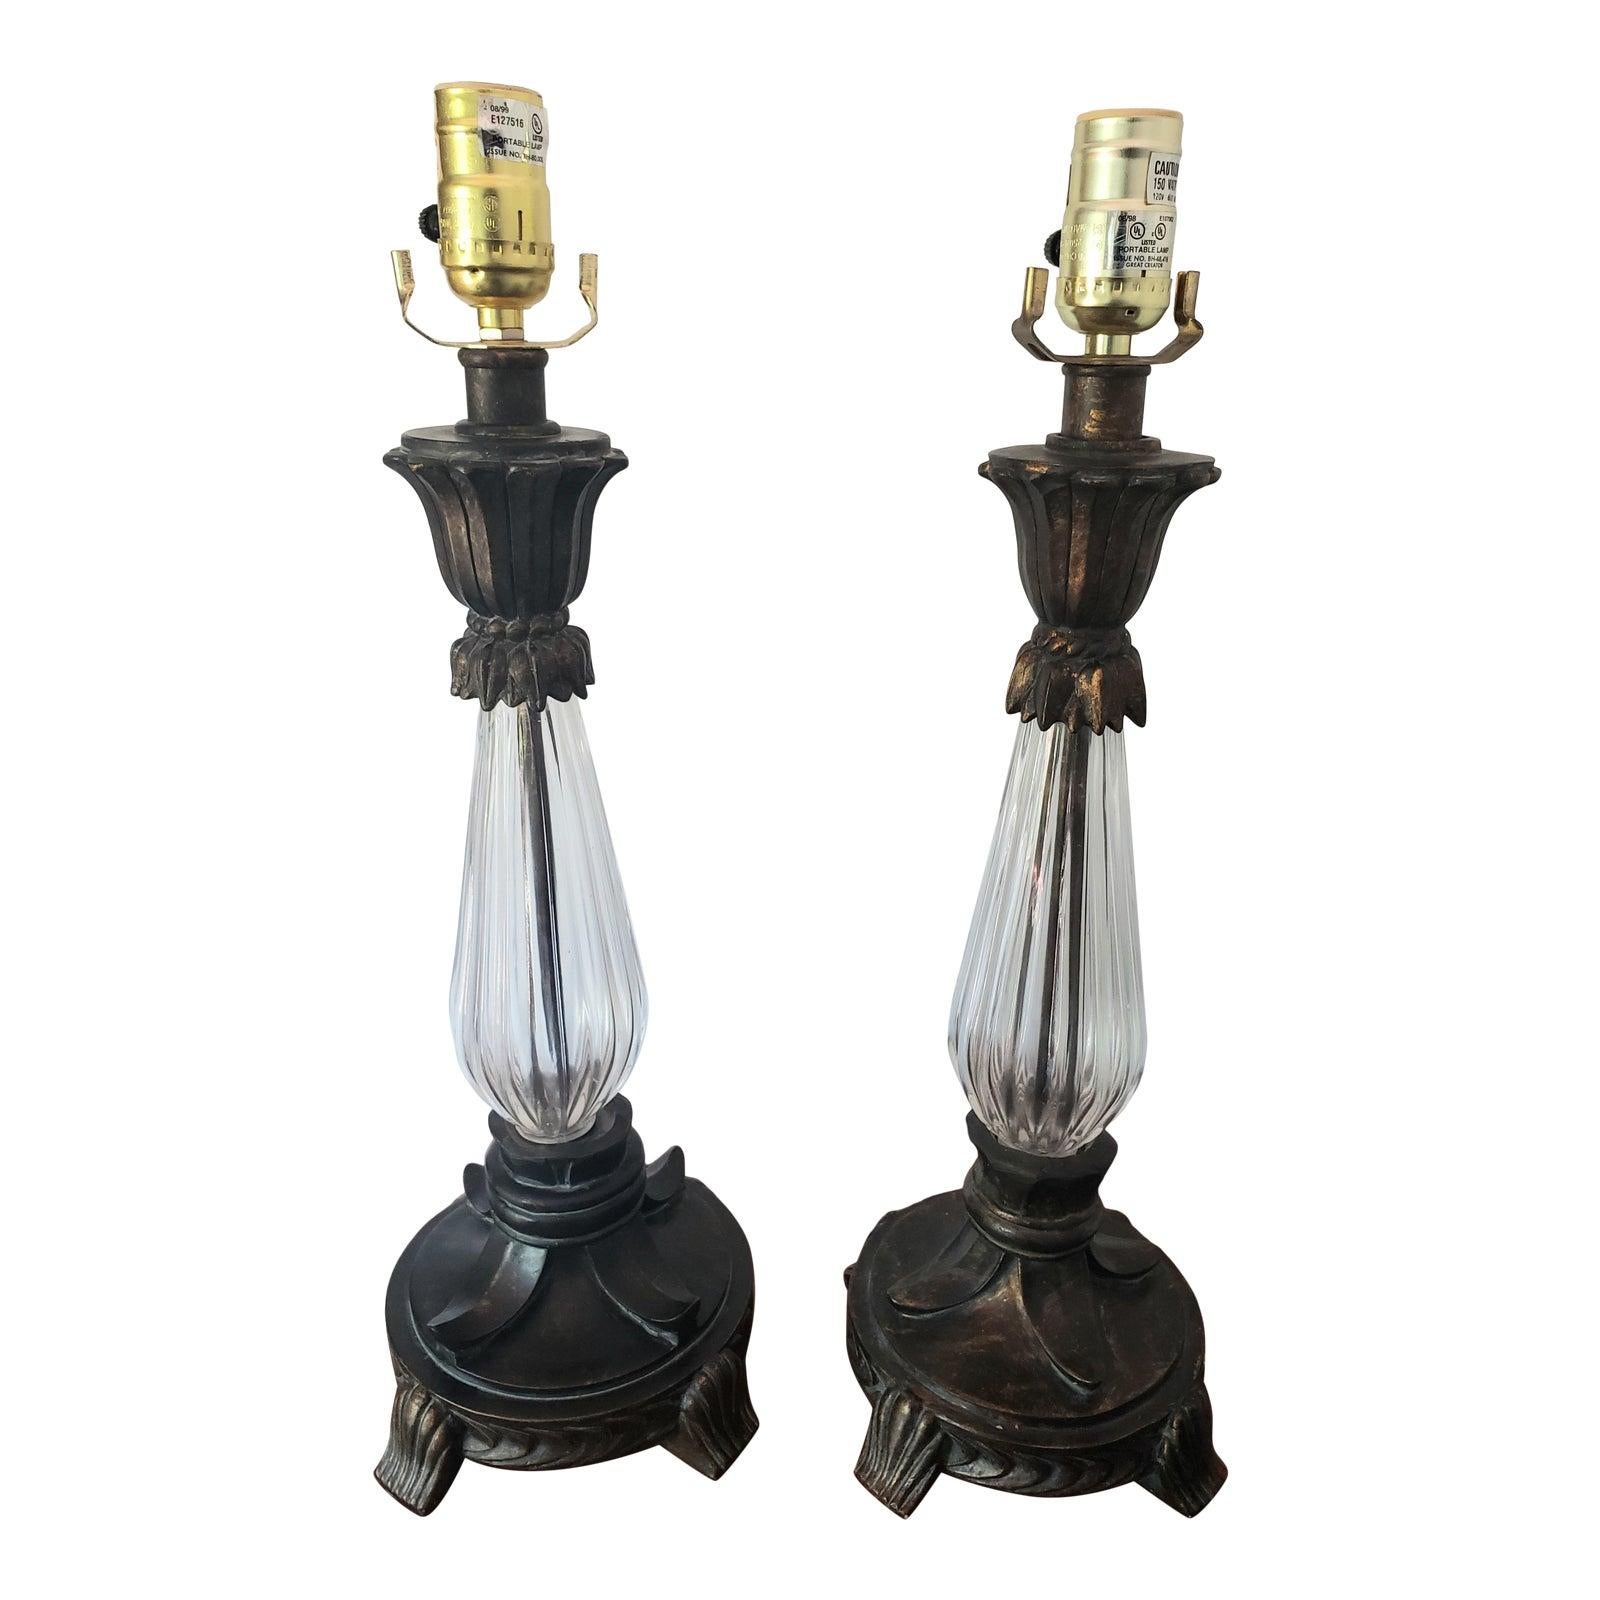 Pair of hand made Ceramic and glass lamps by Michael Berman.
Lamps measure 7.25